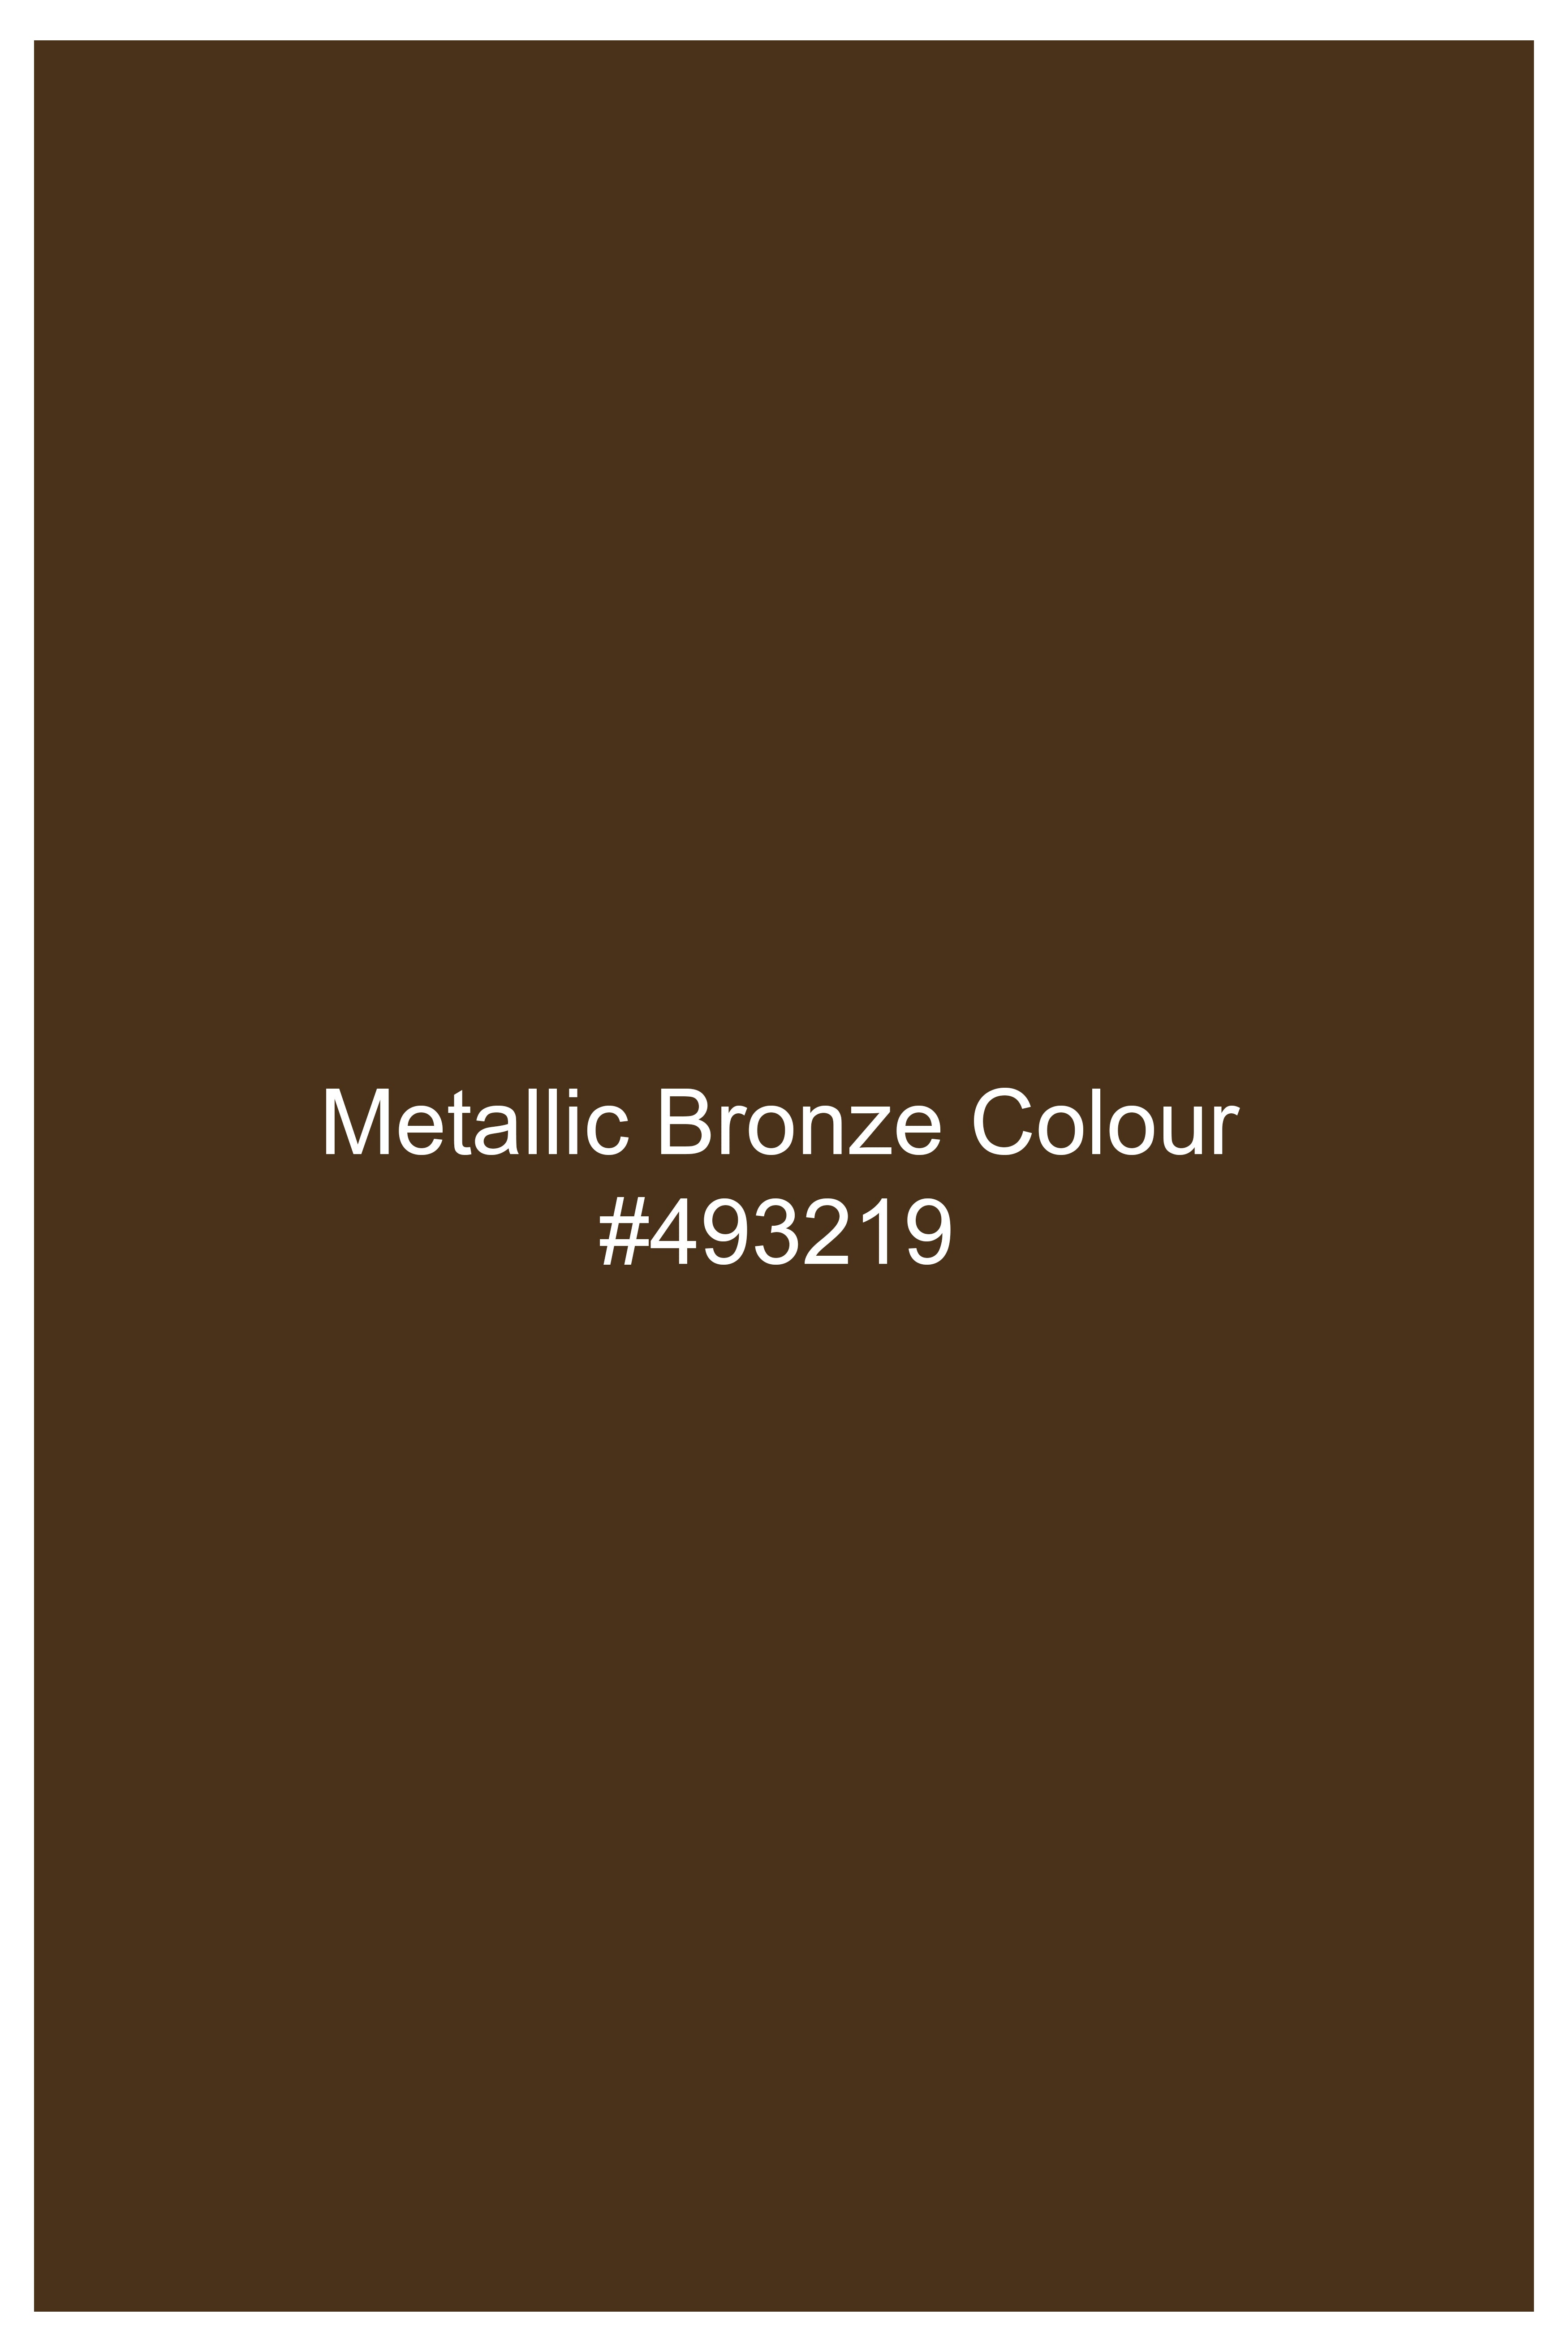 Metallic Bronze Brown Premium Cotton Stretchable Traveler Blazer BL2779-SB-36, BL2779-SB-38, BL2779-SB-40, BL2779-SB-42, BL2779-SB-44, BL2779-SB-46, BL2779-SB-48, BL2779-SB-50, BL2779-SB-52, BL2779-SB-54, BL2779-SB-56, BL2779-SB-58, BL2779-SB-60